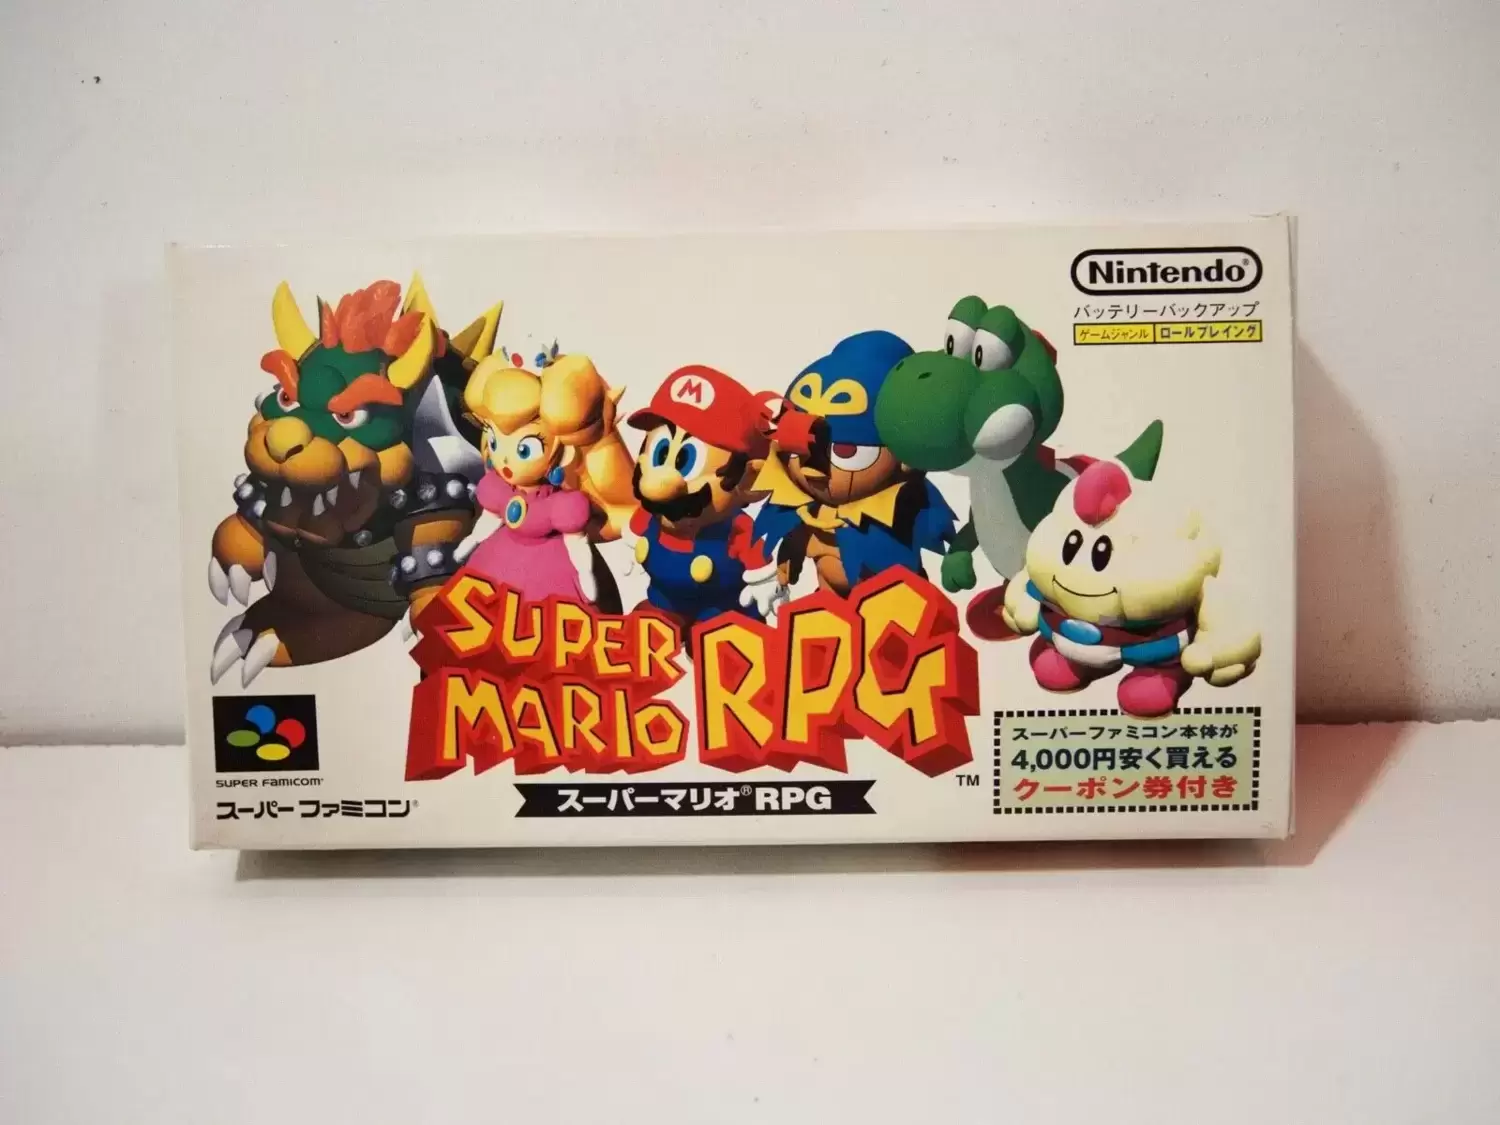 Super Famicom Games - Super Mario RPG